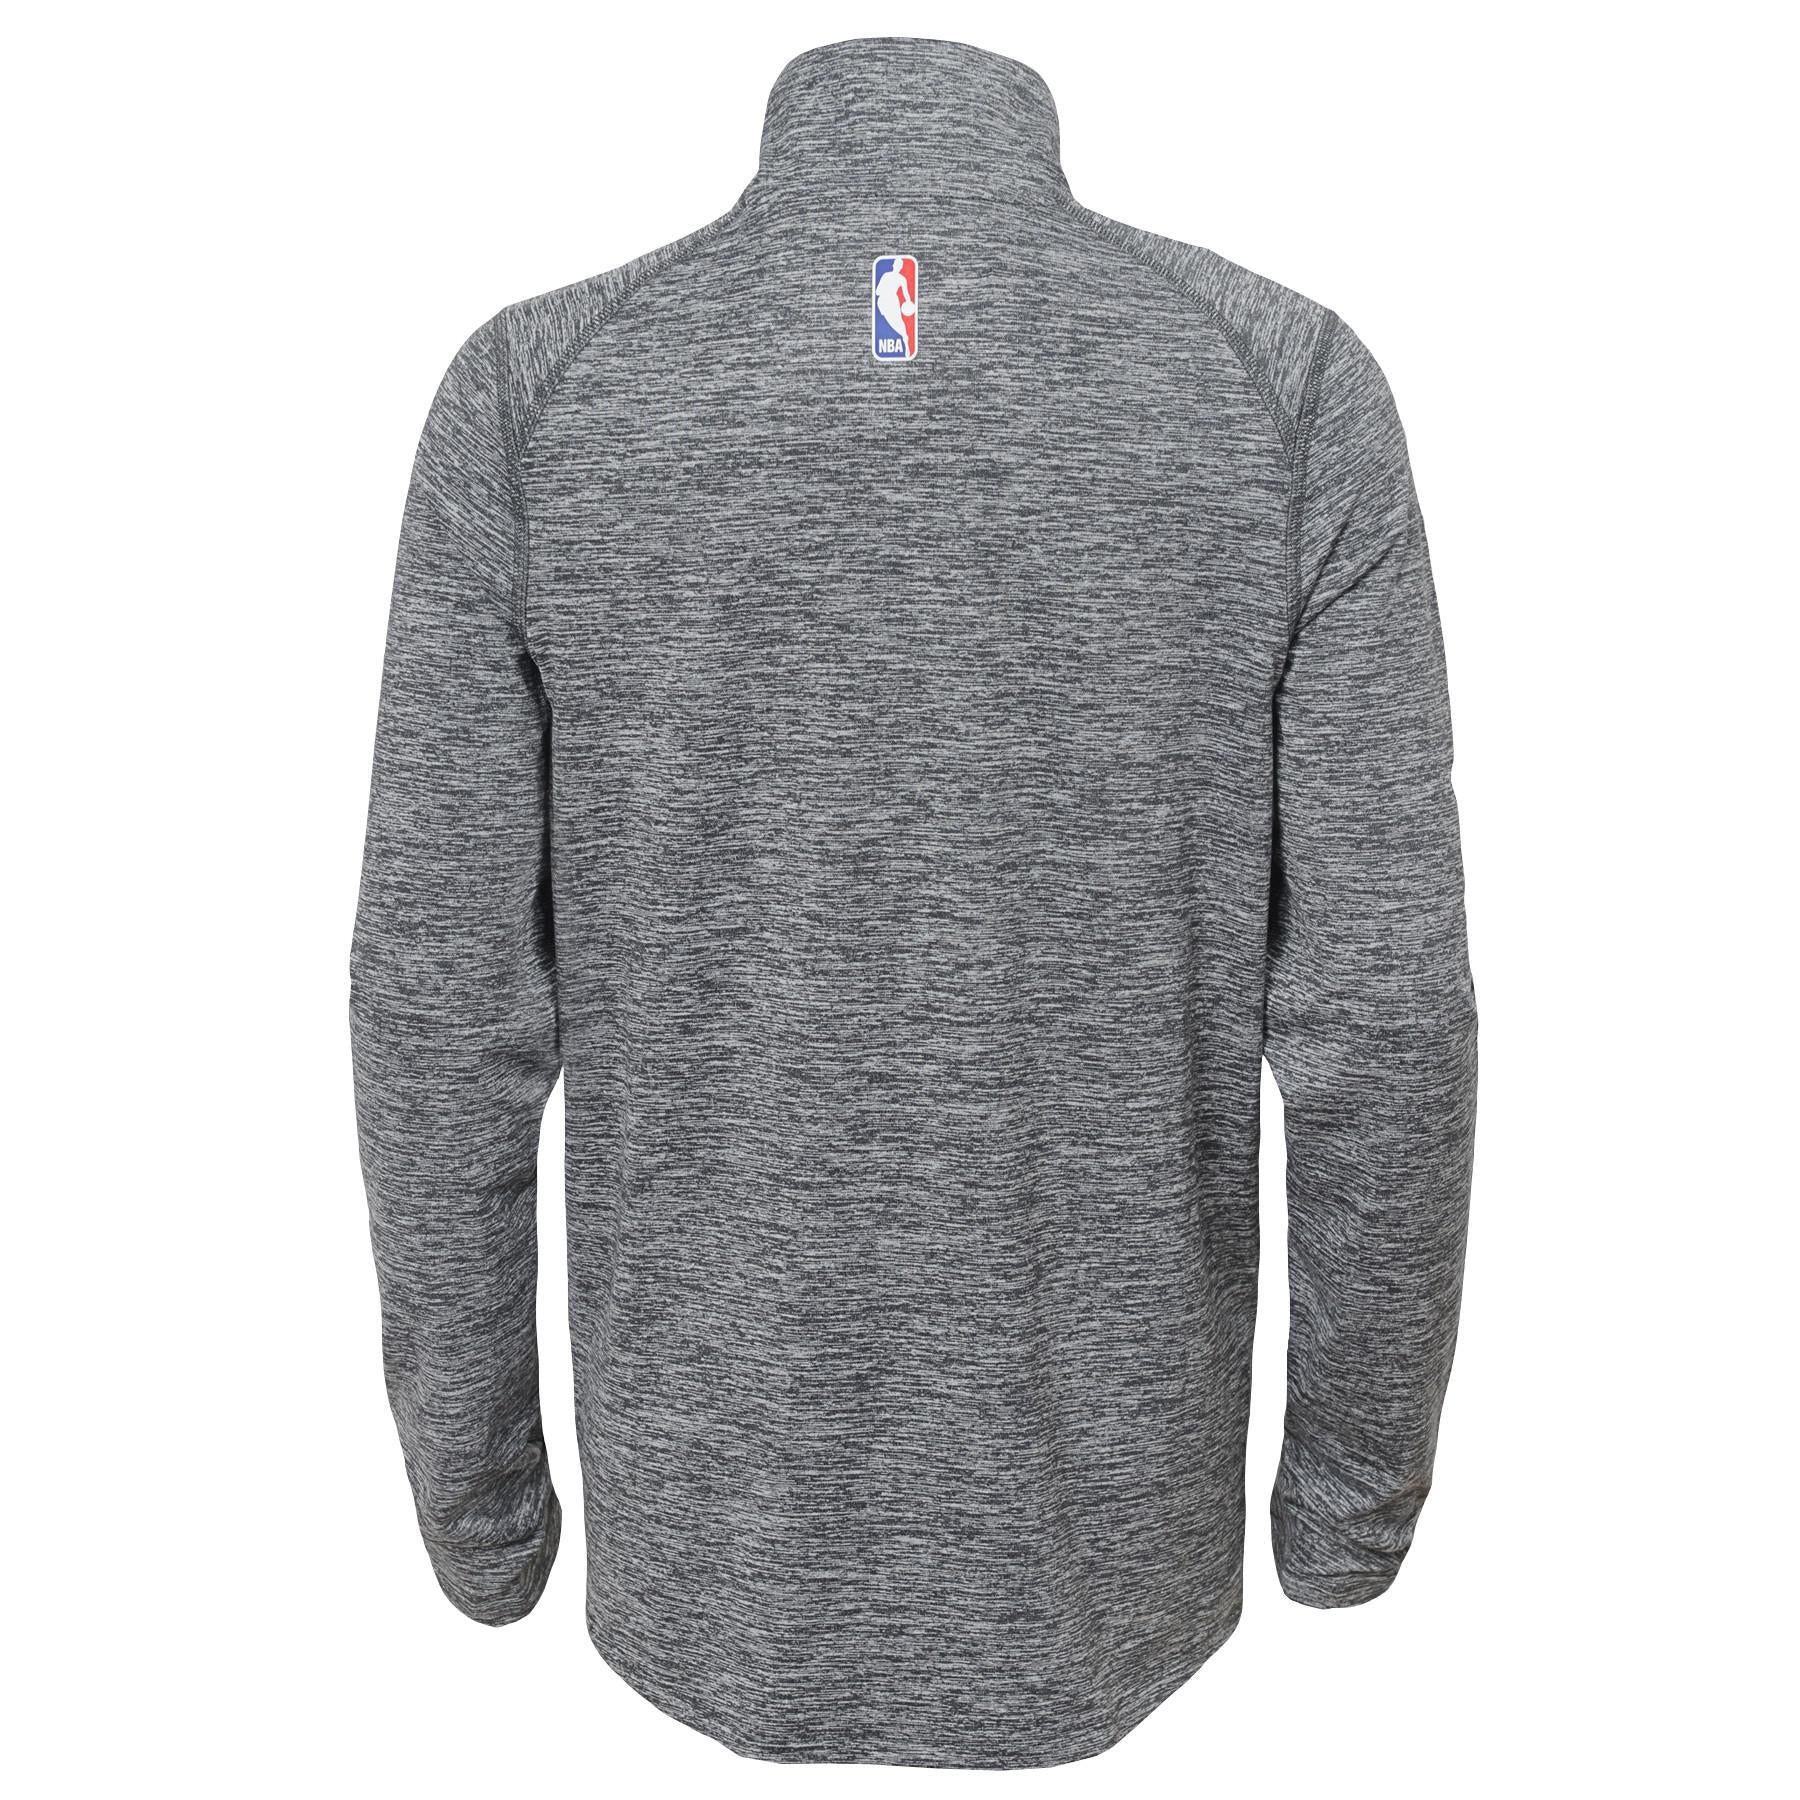 Nike, Shirts, Nike Drifit Mens Nba New York Knicks Polo Shirt S